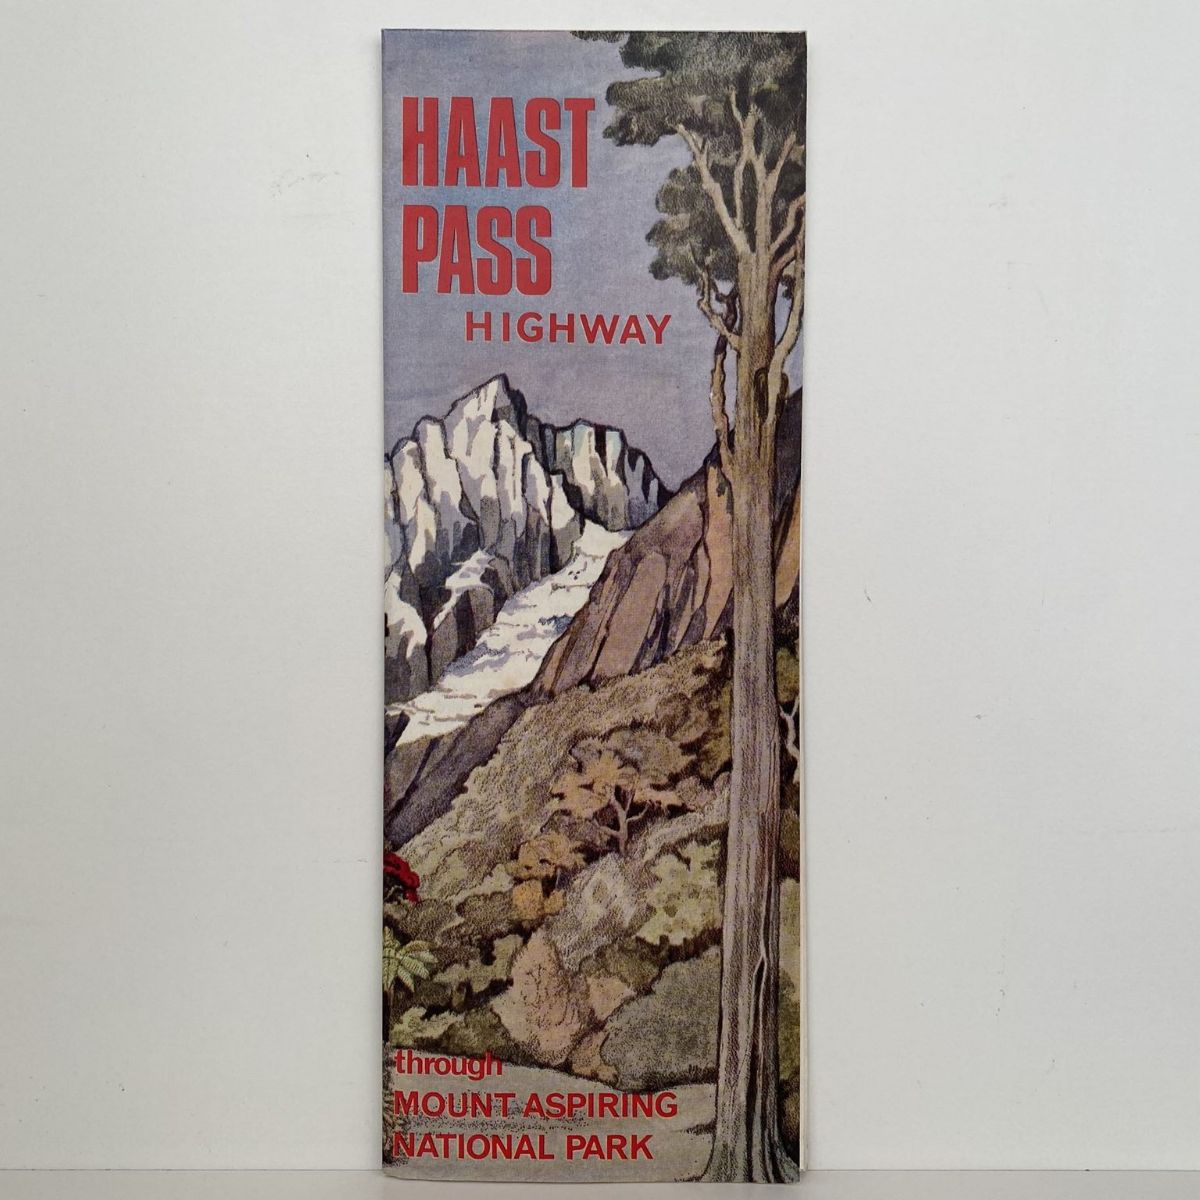 HAAST PASS HIGHWAY through Mount Aspiring National Park